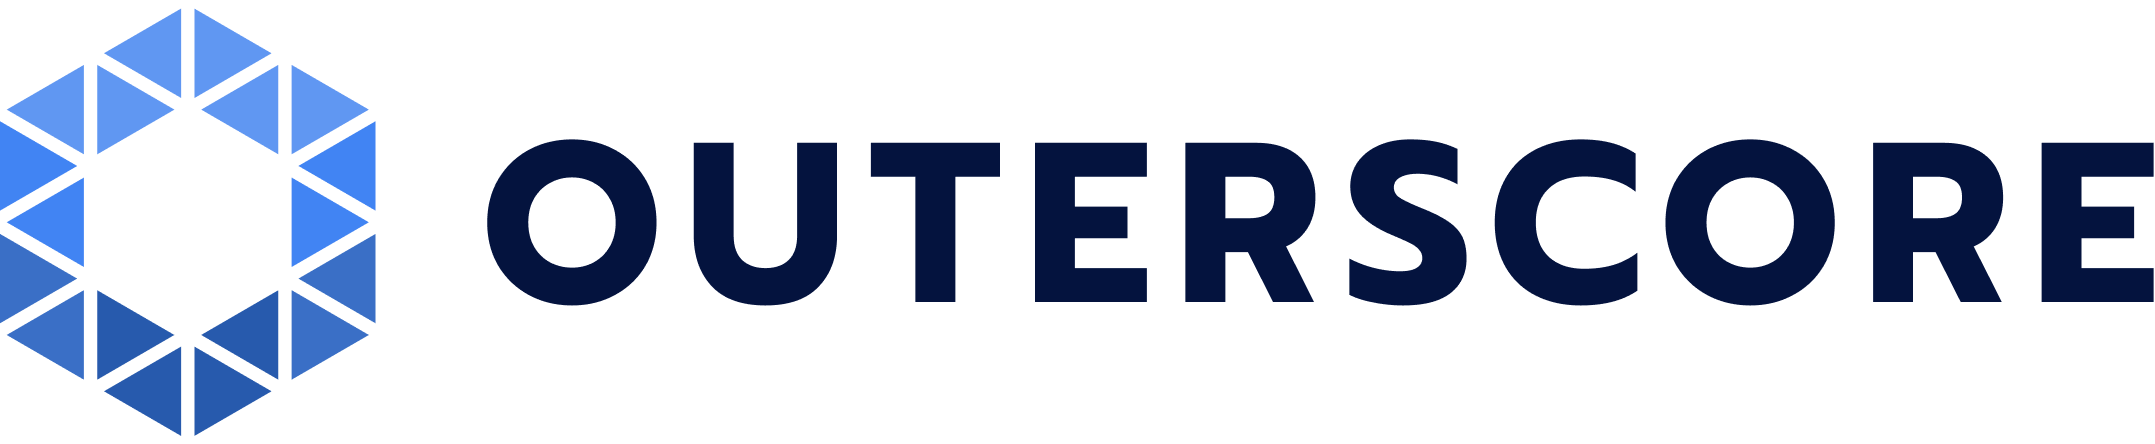 Logo Outerscore